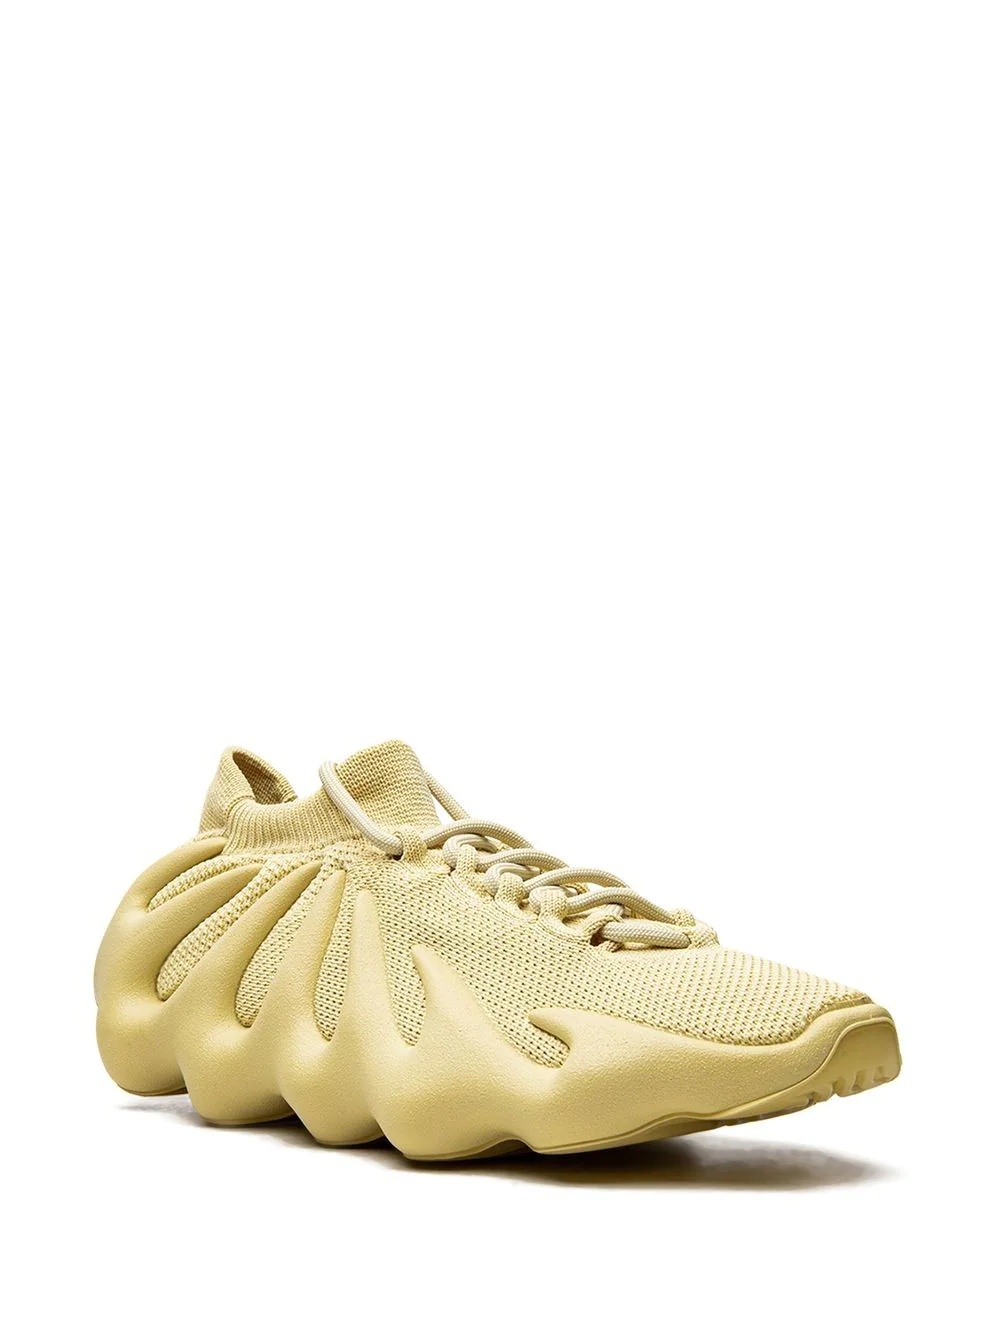 Yeezy 450 "Sulfur" sneakers - 2